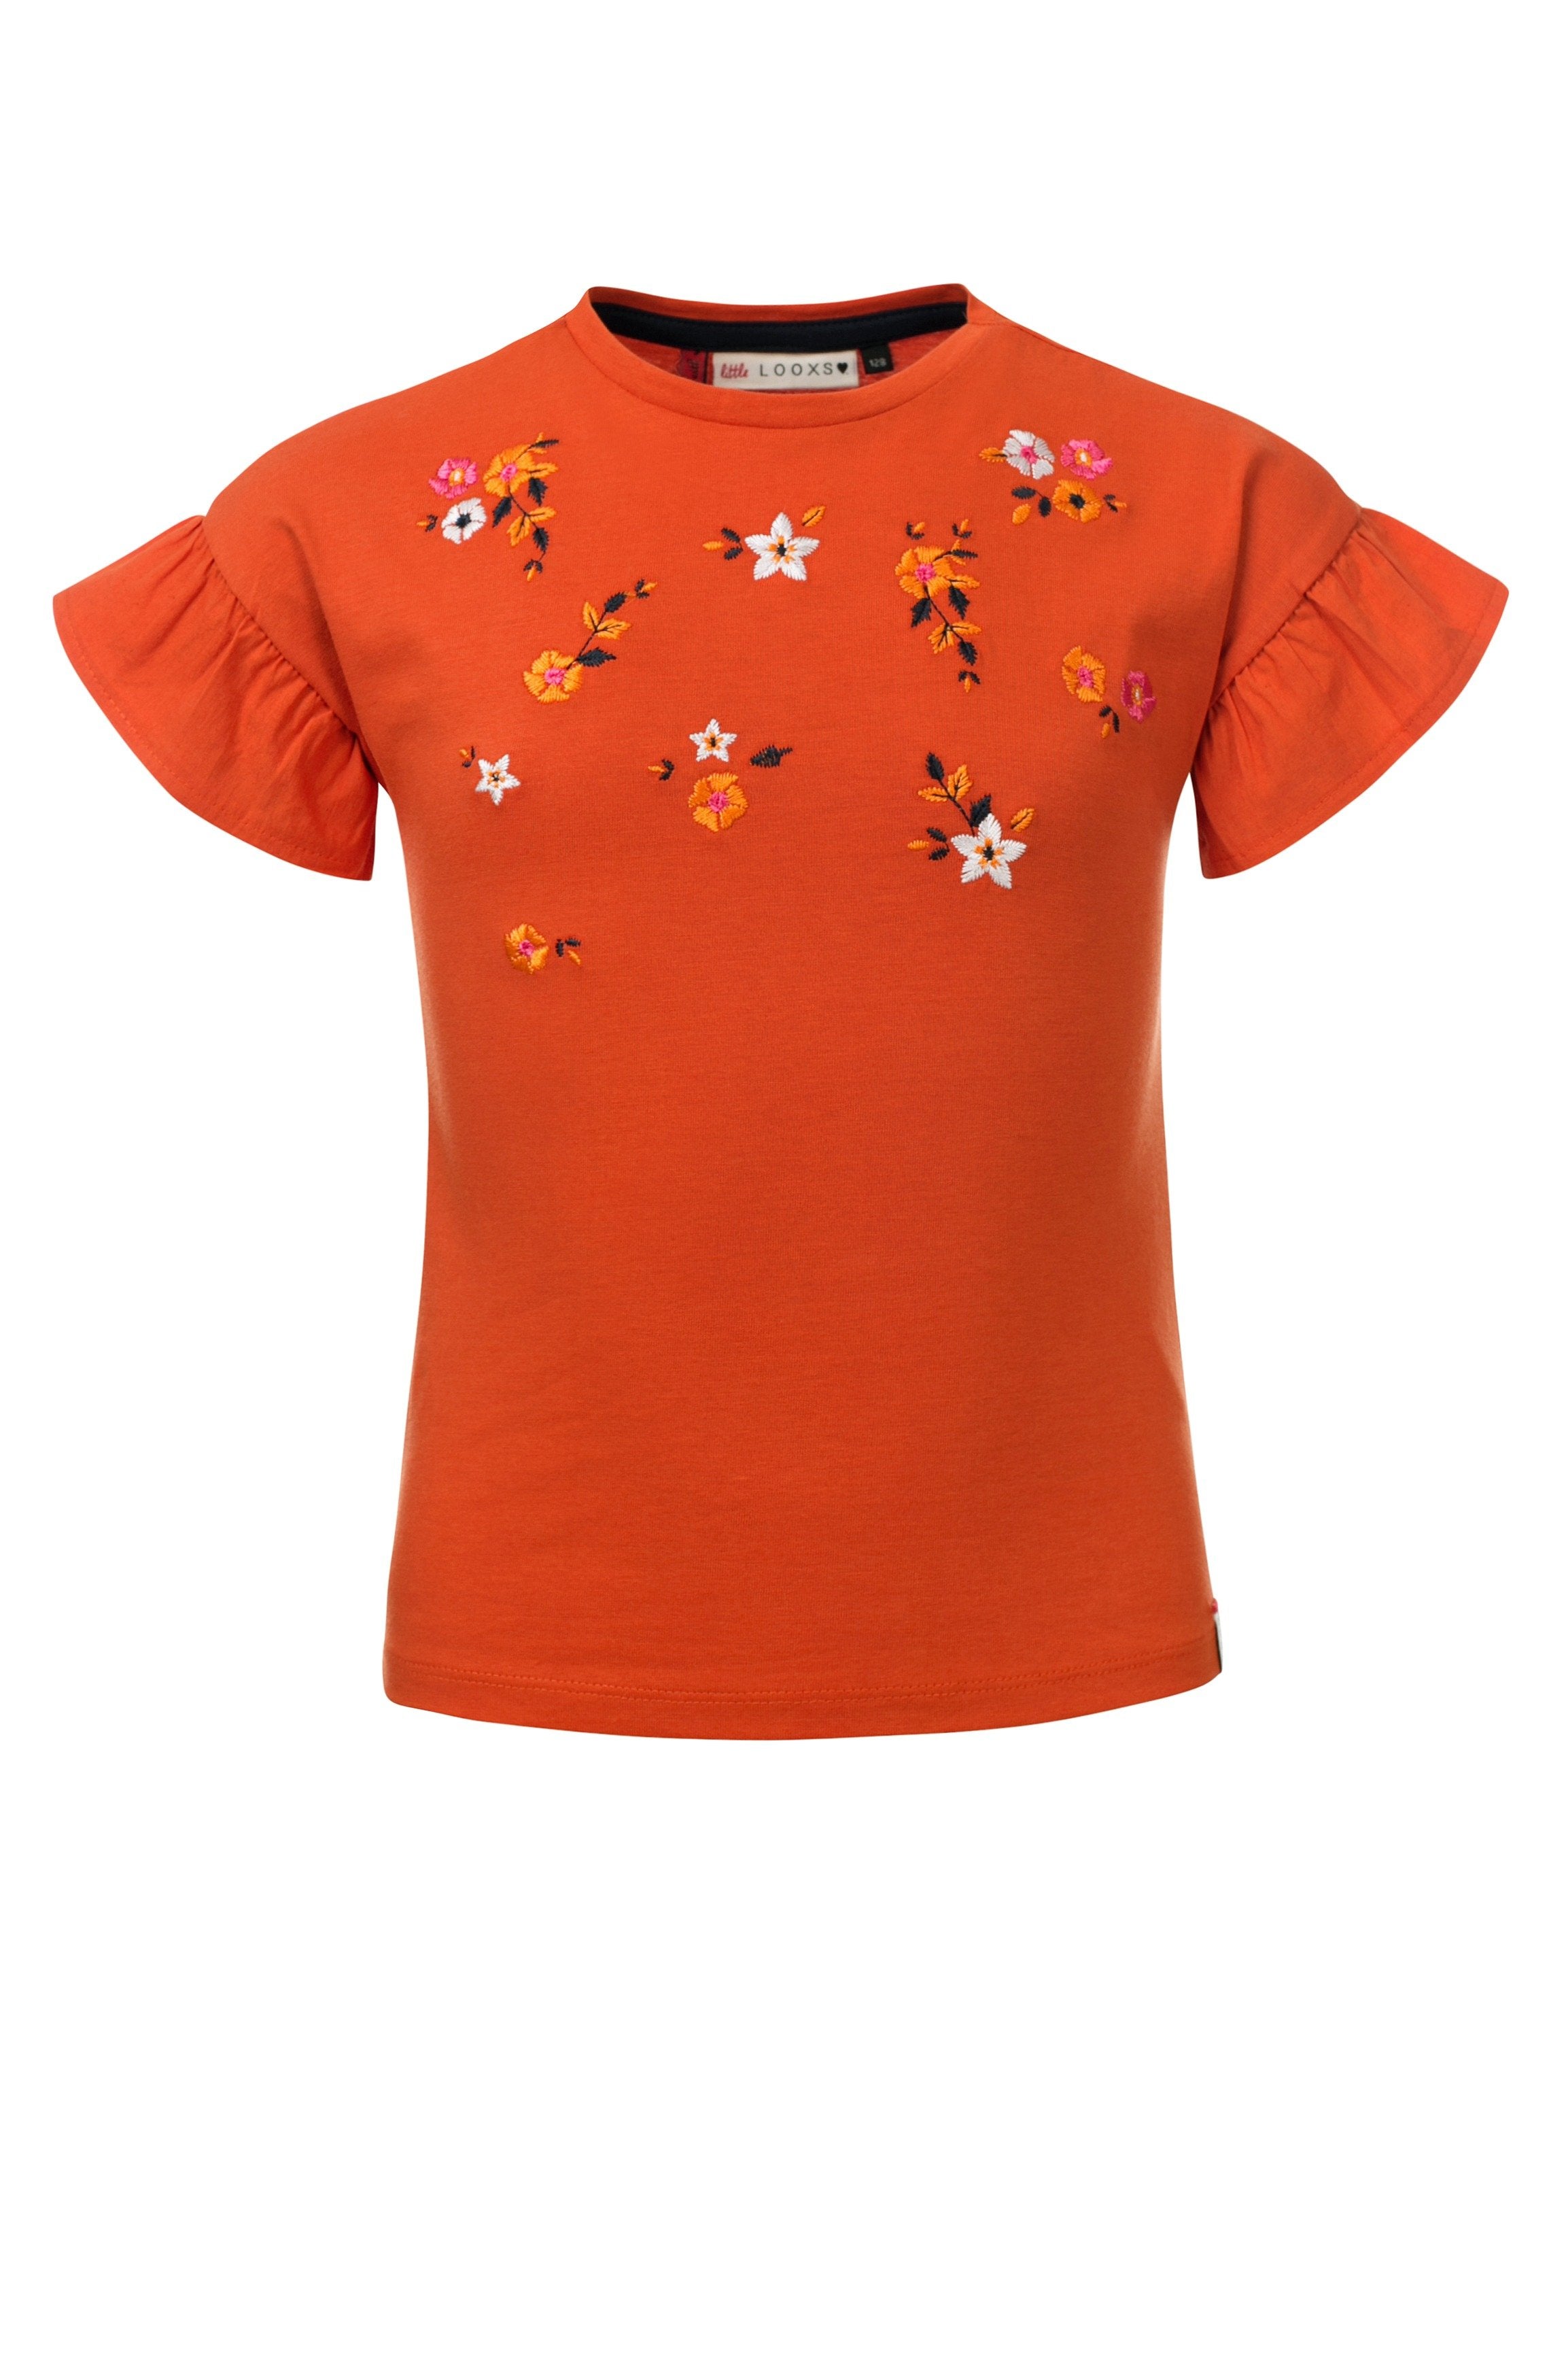 Meisjes T-Shirt Poplin Ruffle van Little Looxs in de kleur Rust in maat 128.